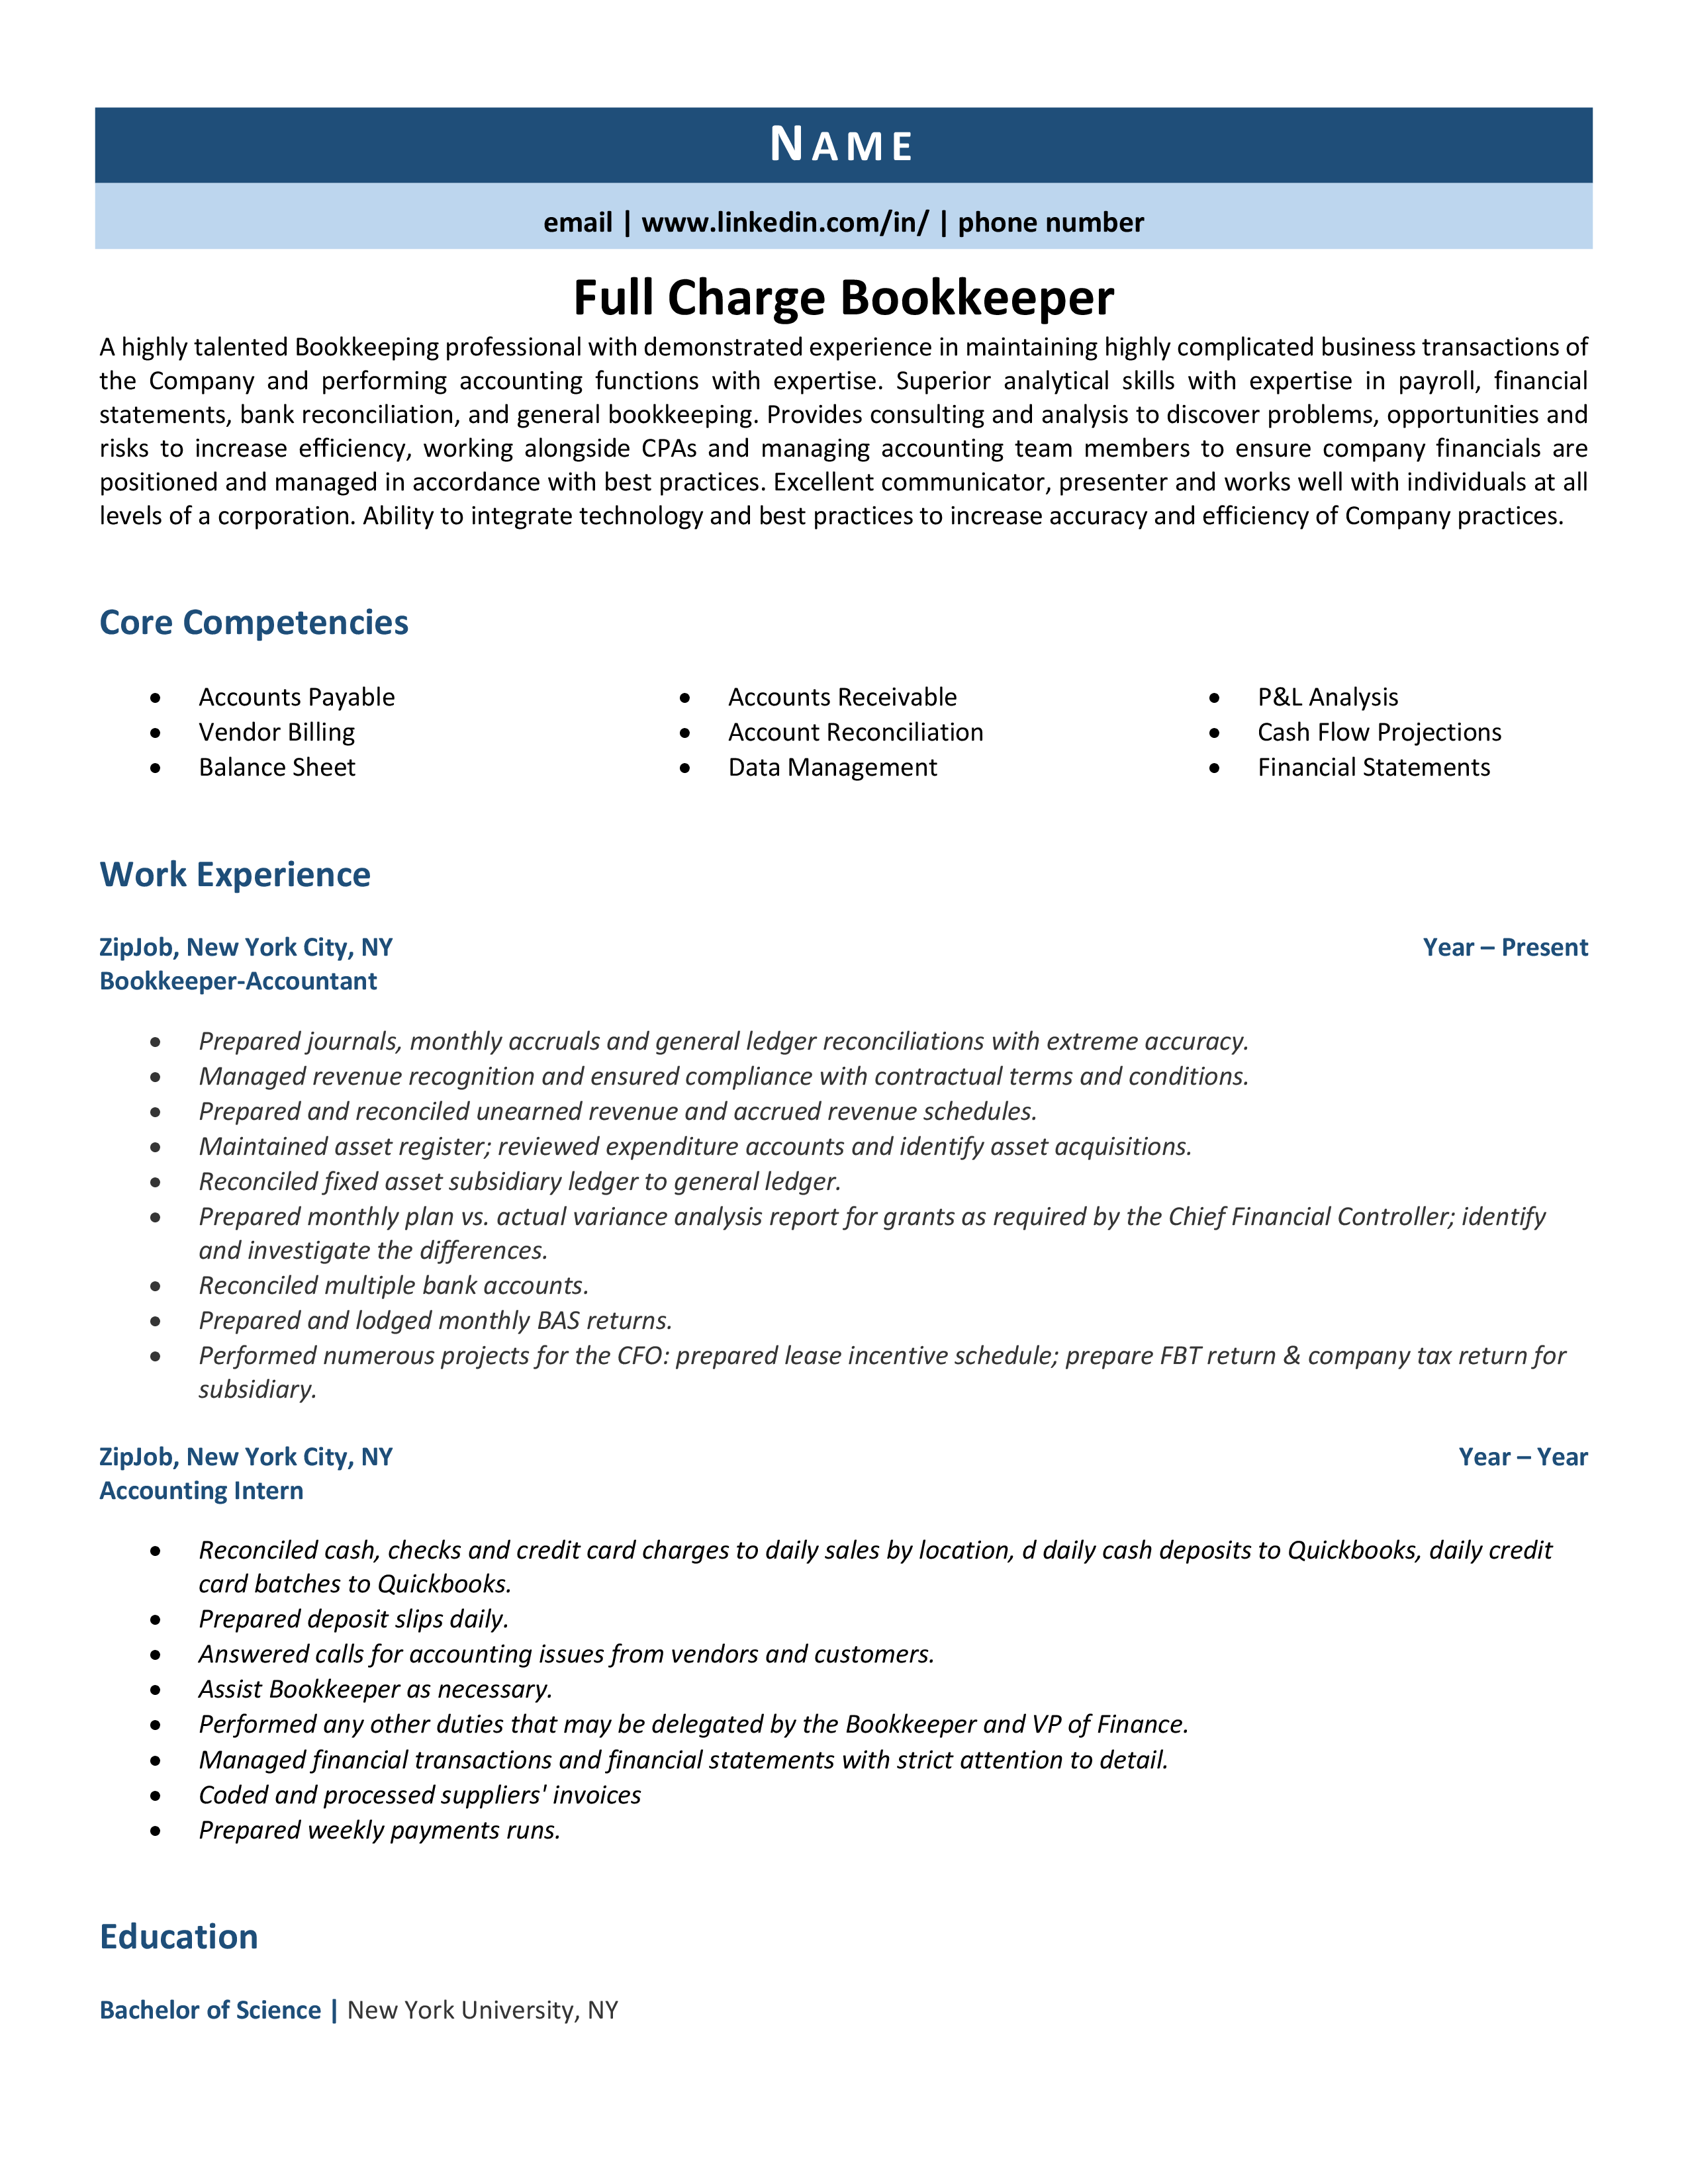 full charge bookkeeper resume